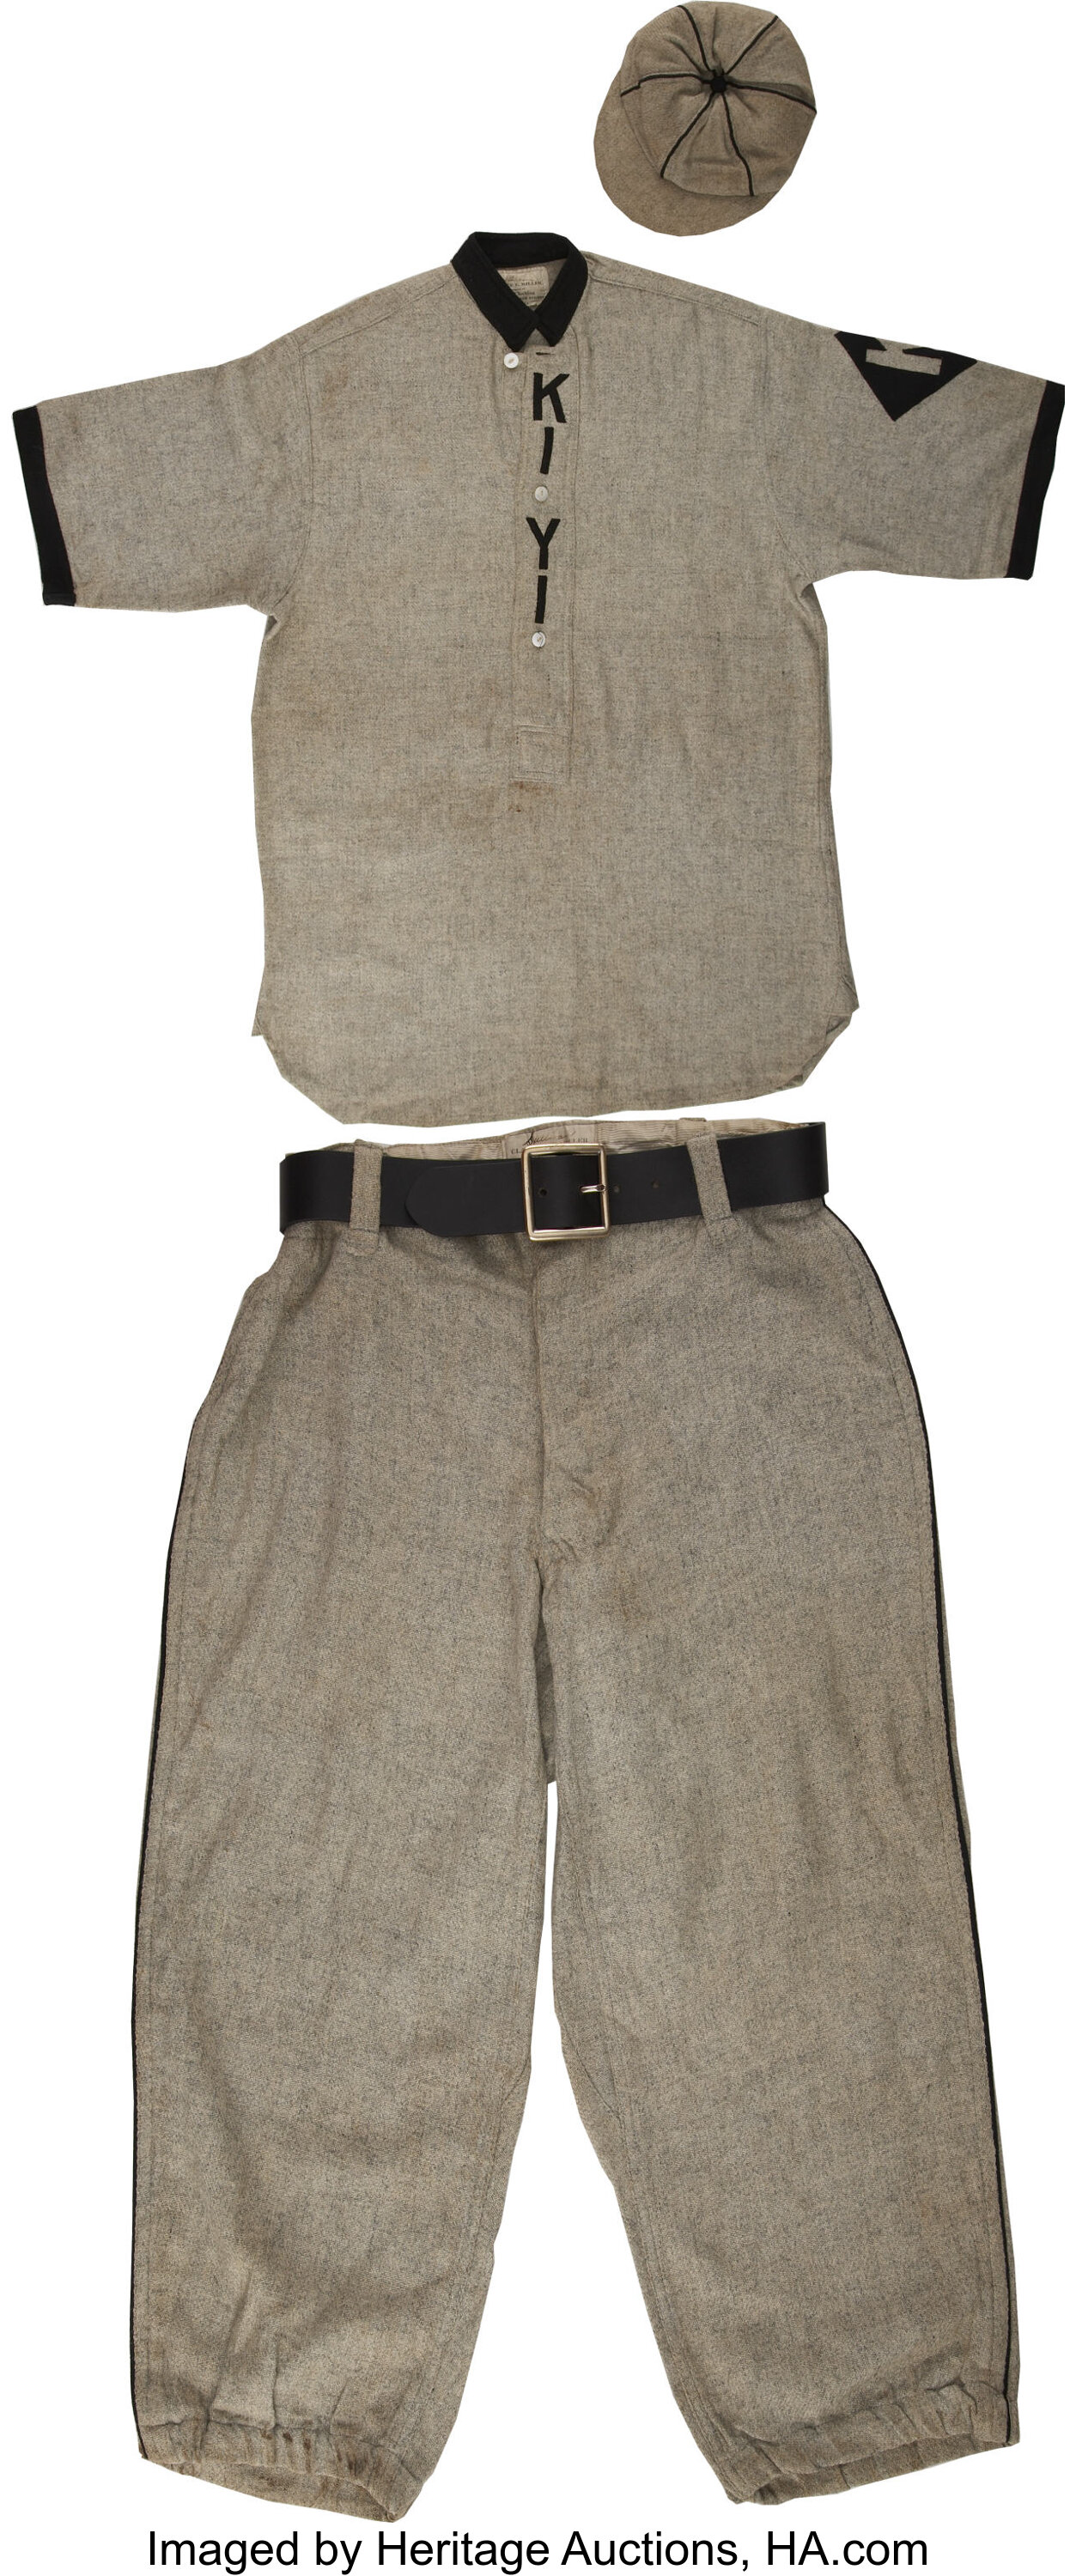 Circa 1910s Ki-Yi Baseball Uniform. Exceptional exemplar of the